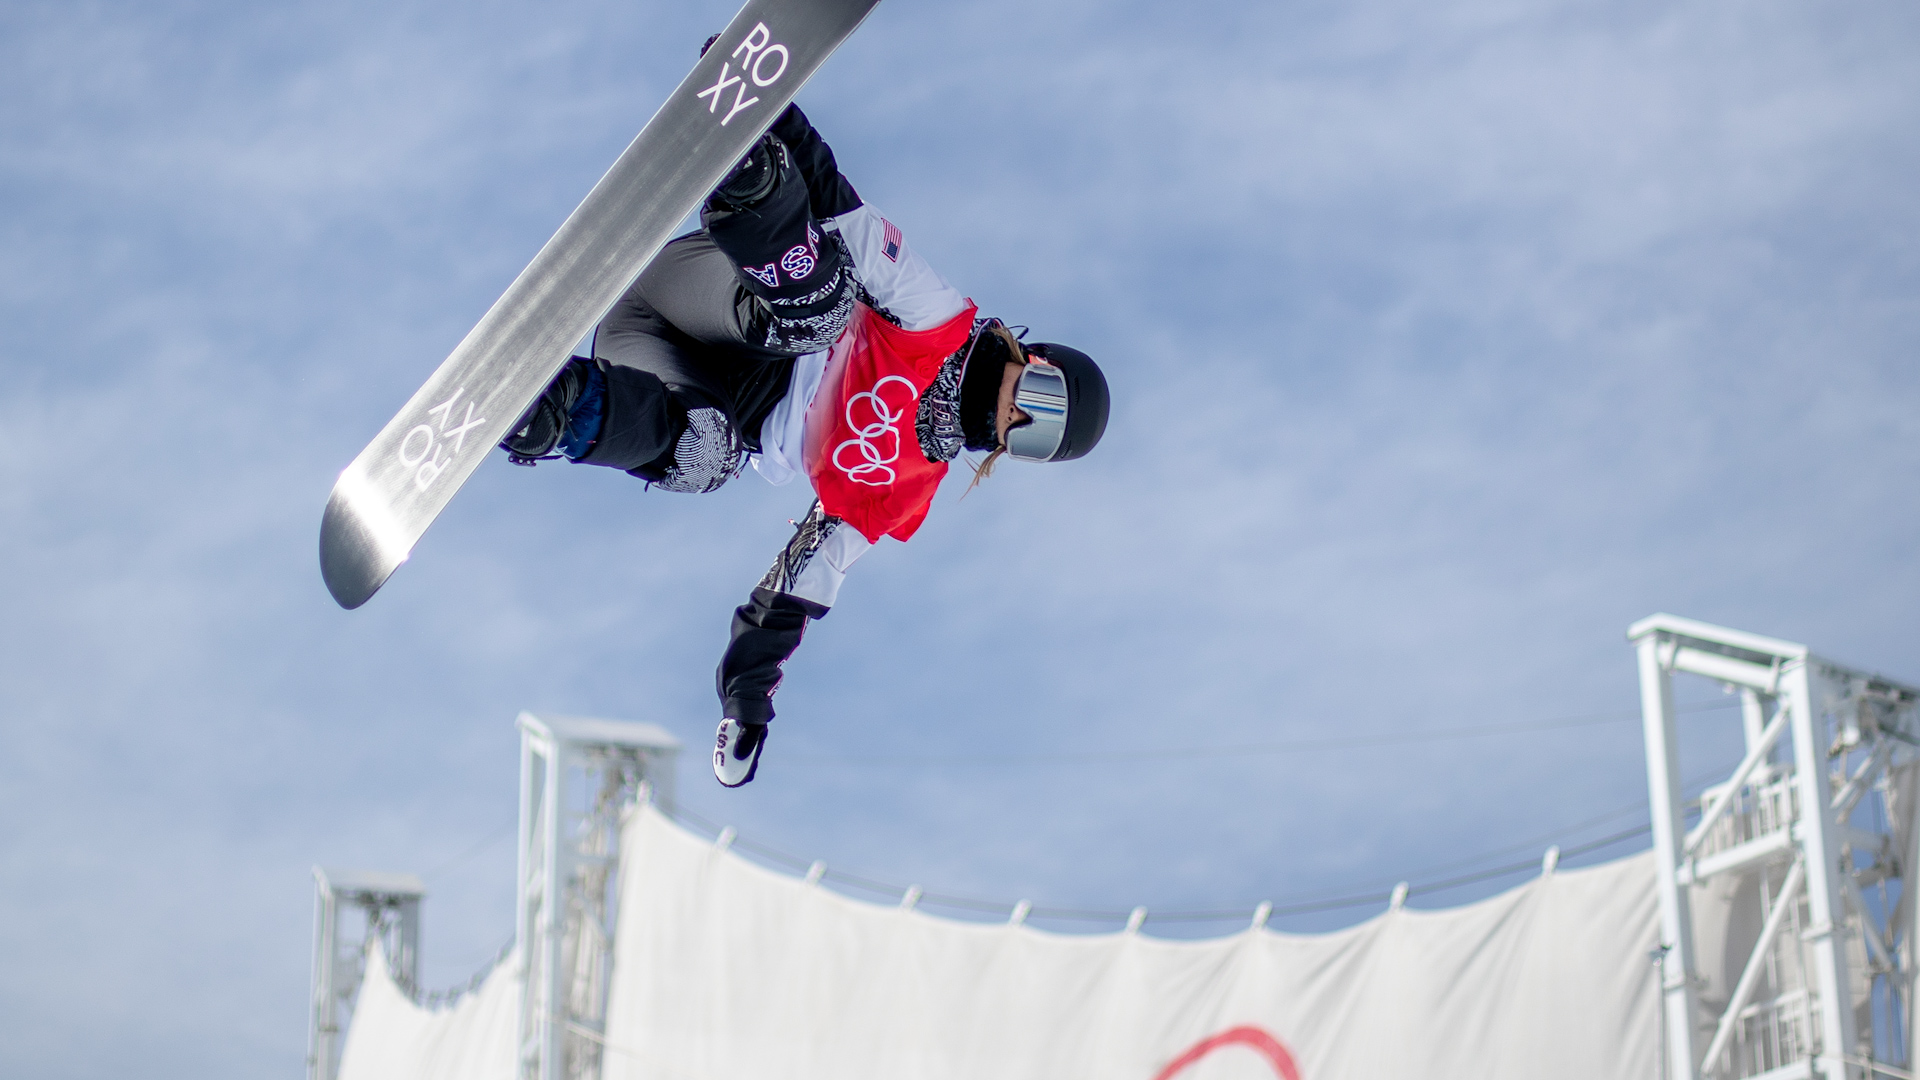 Defending Olympic Champion Chloe Kim Tops Qualifying Field Heading Into Snowboarding Halfpipe Final